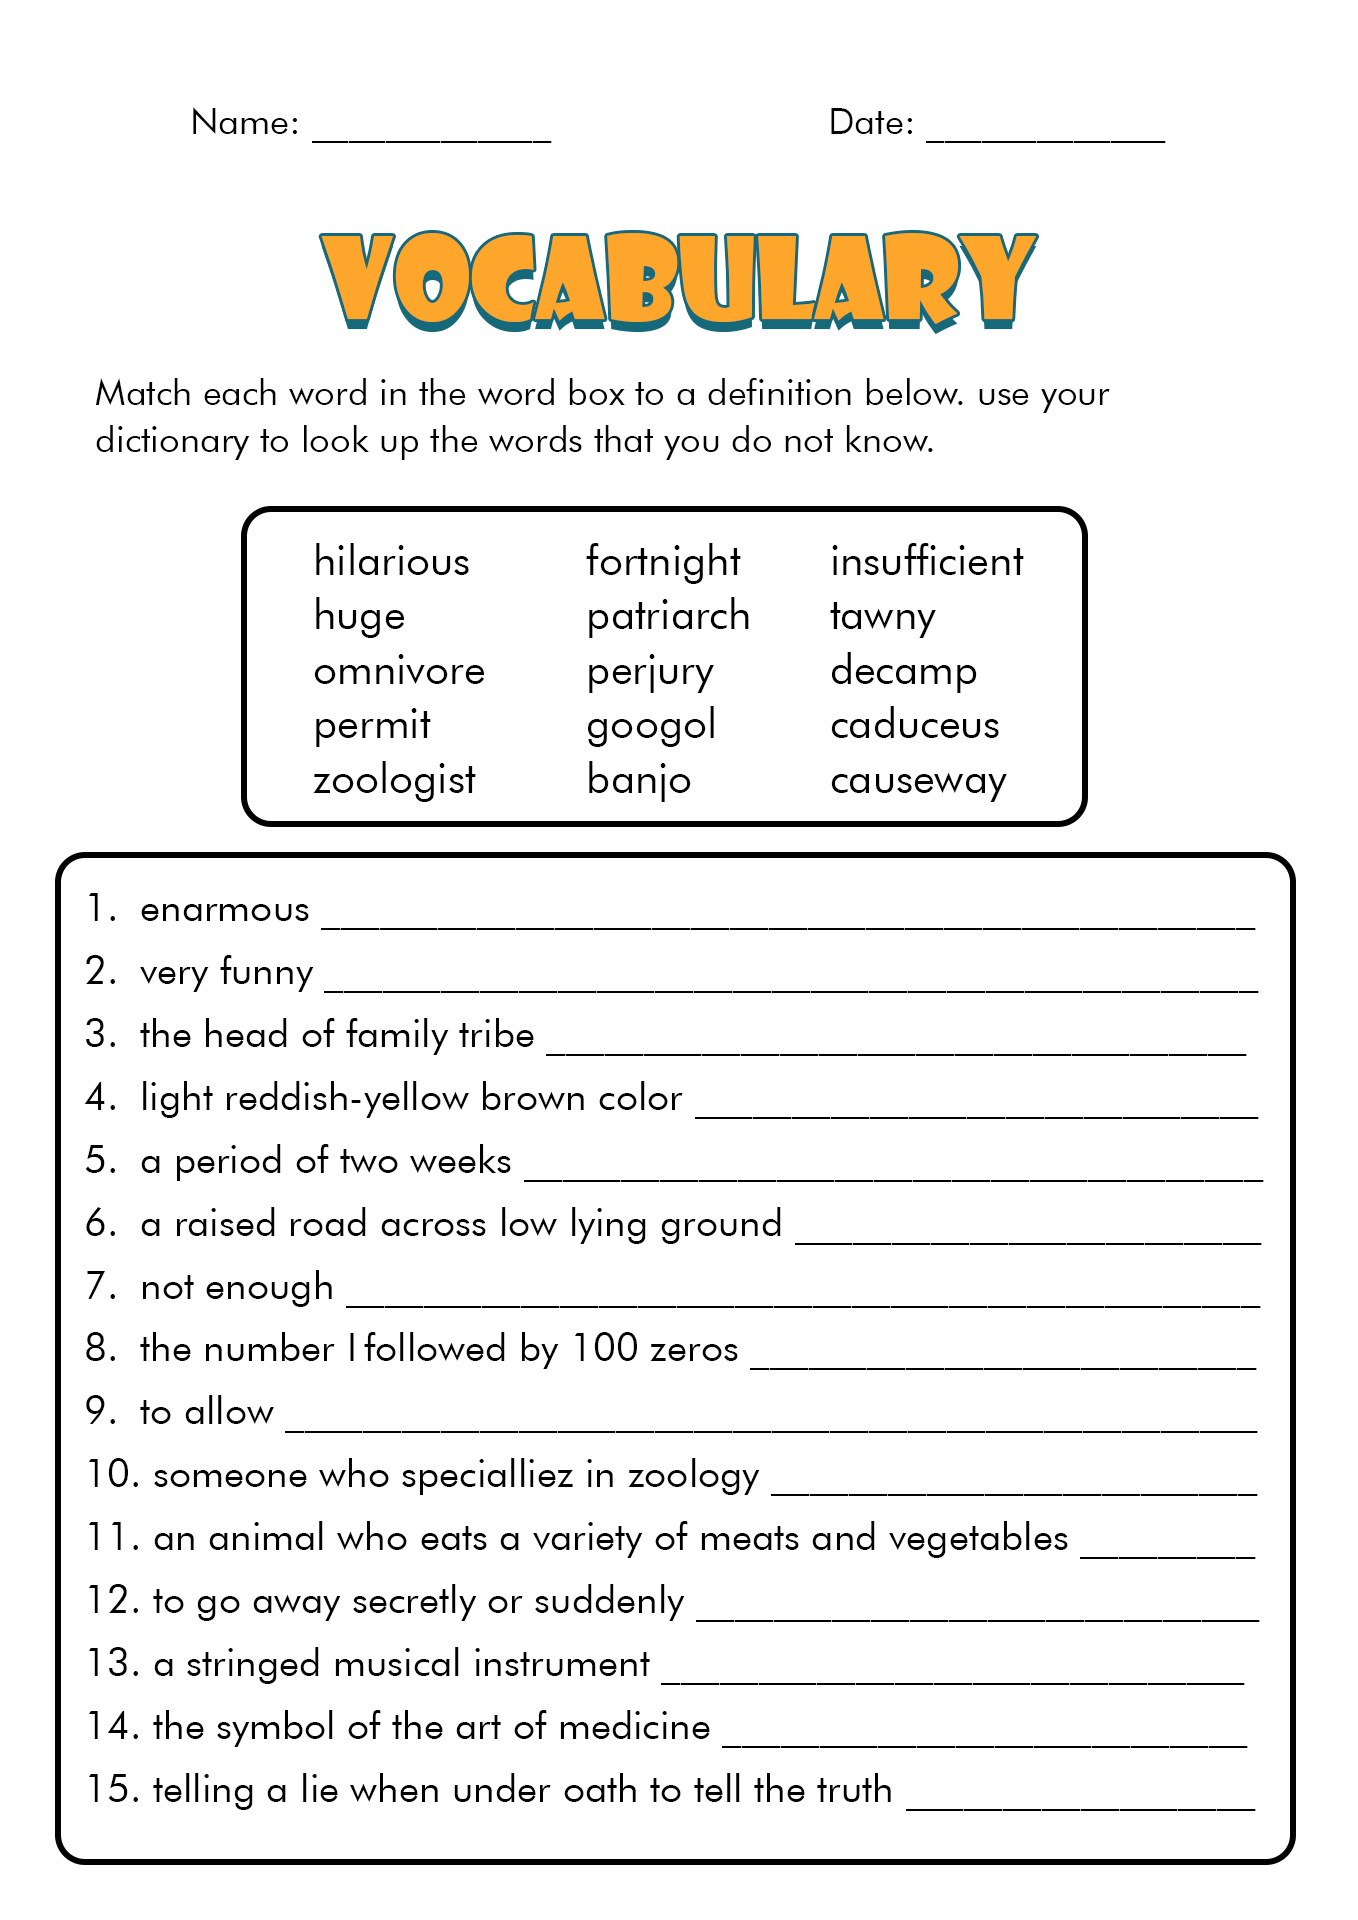 Printable Vocabulary Test Template Image